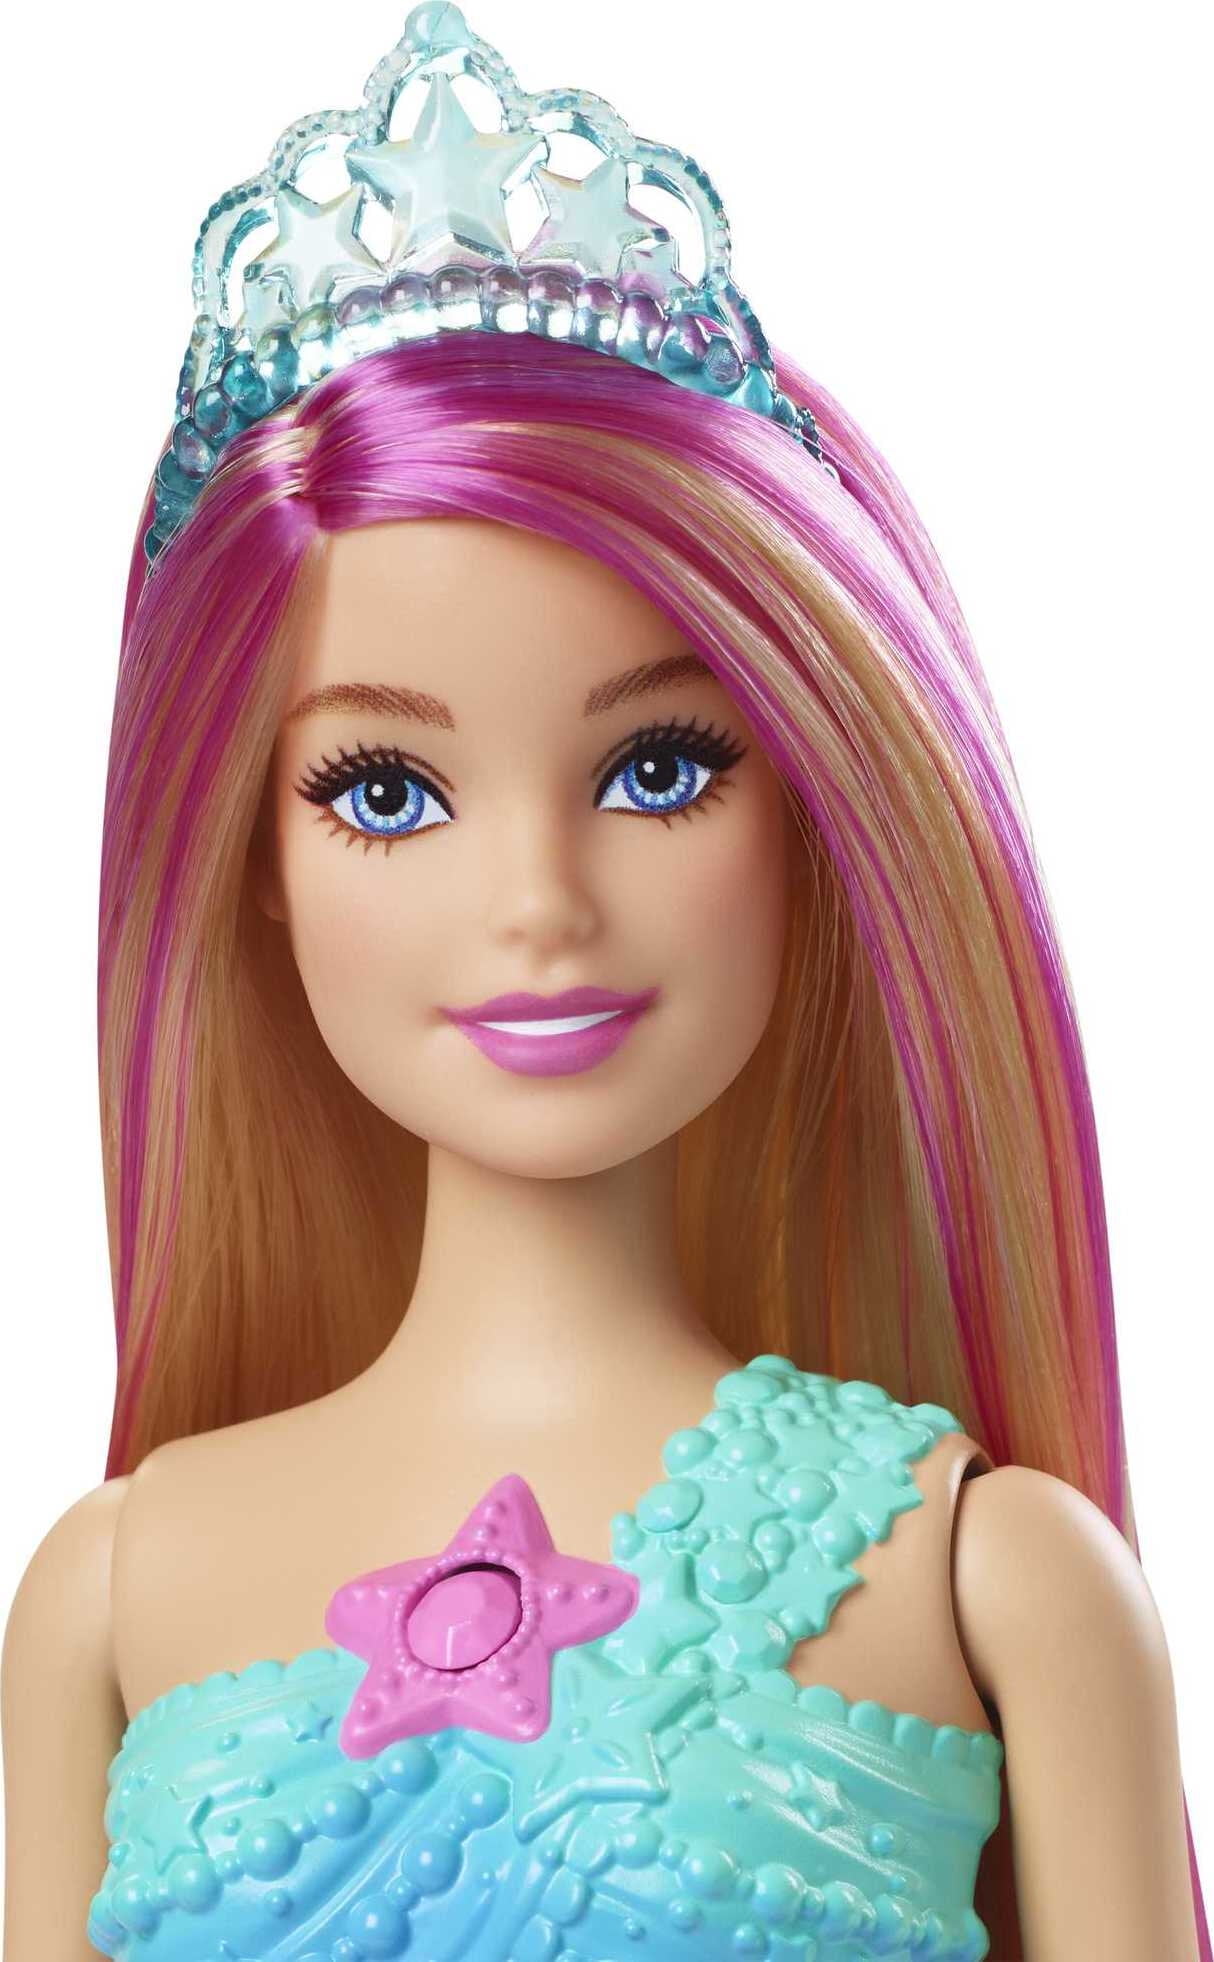 Princesa Barbie Dreamtopia 2 En 1 Sirena Mattel